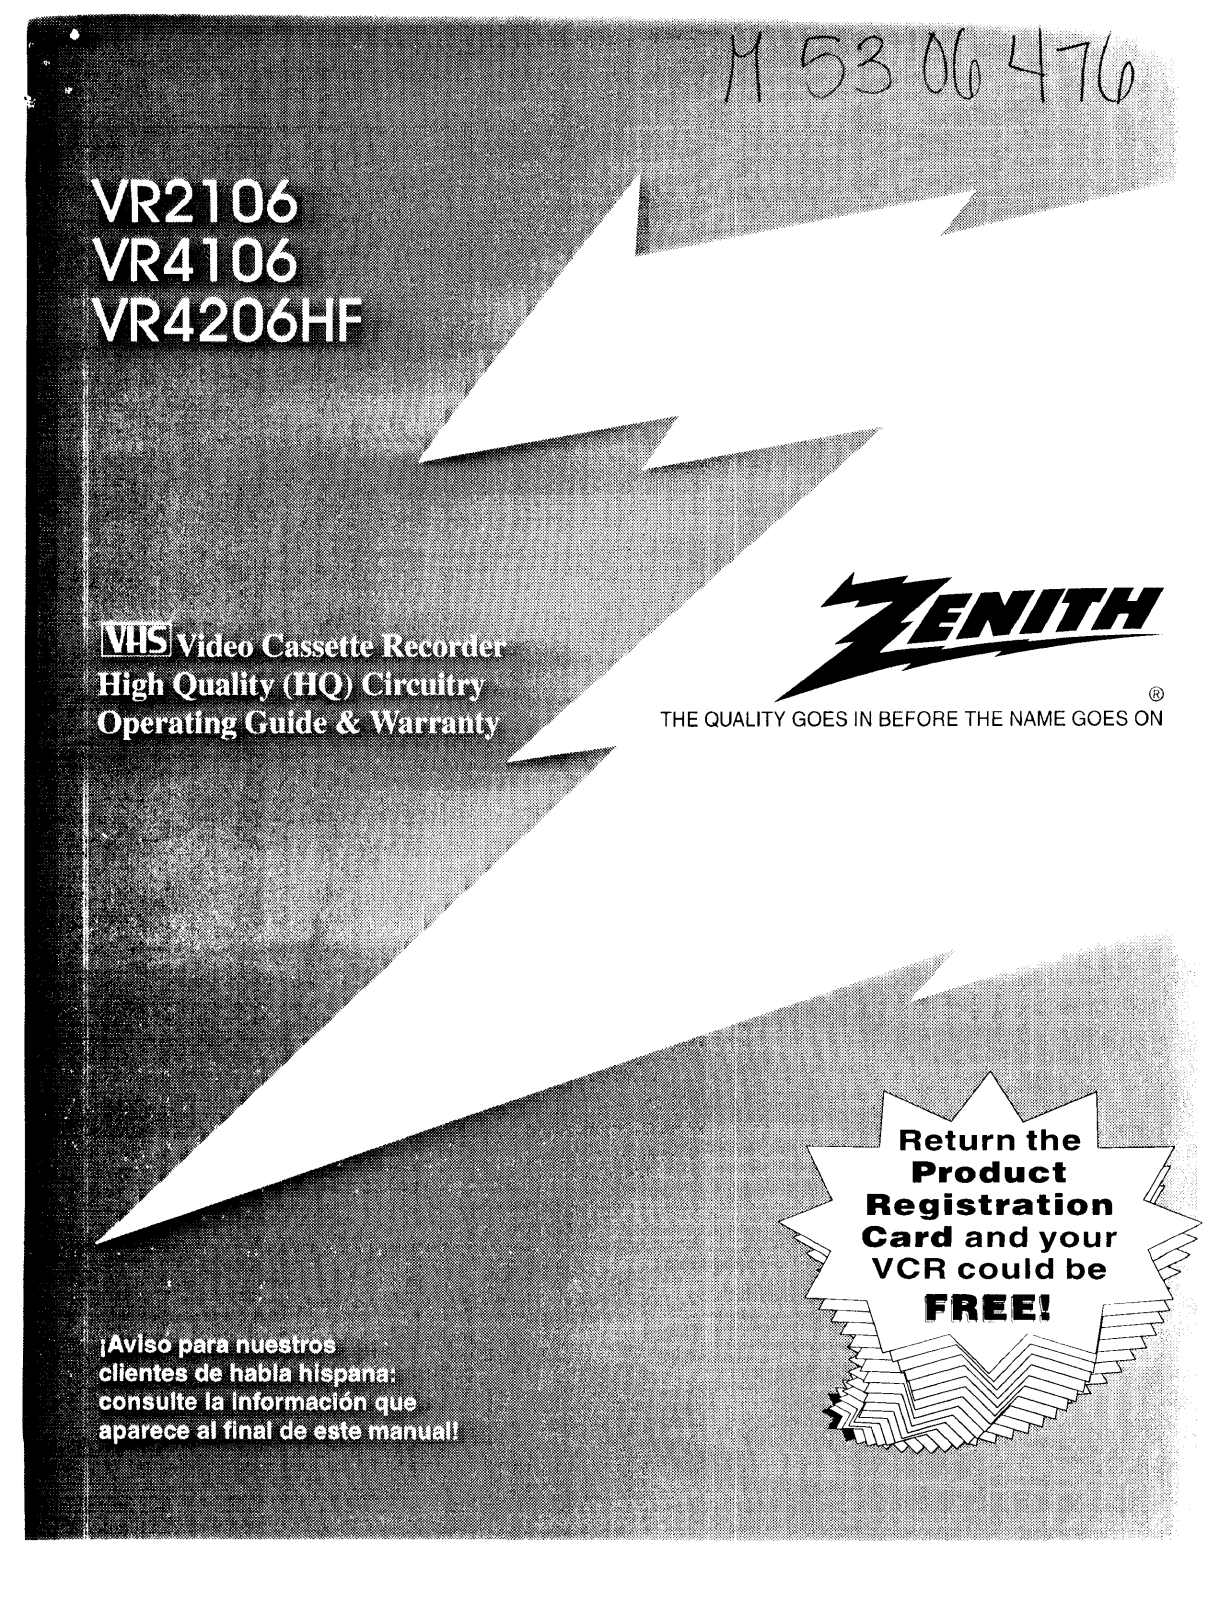 Zenith VR2106, VR4206HF, VR4106 Owner’s Manual